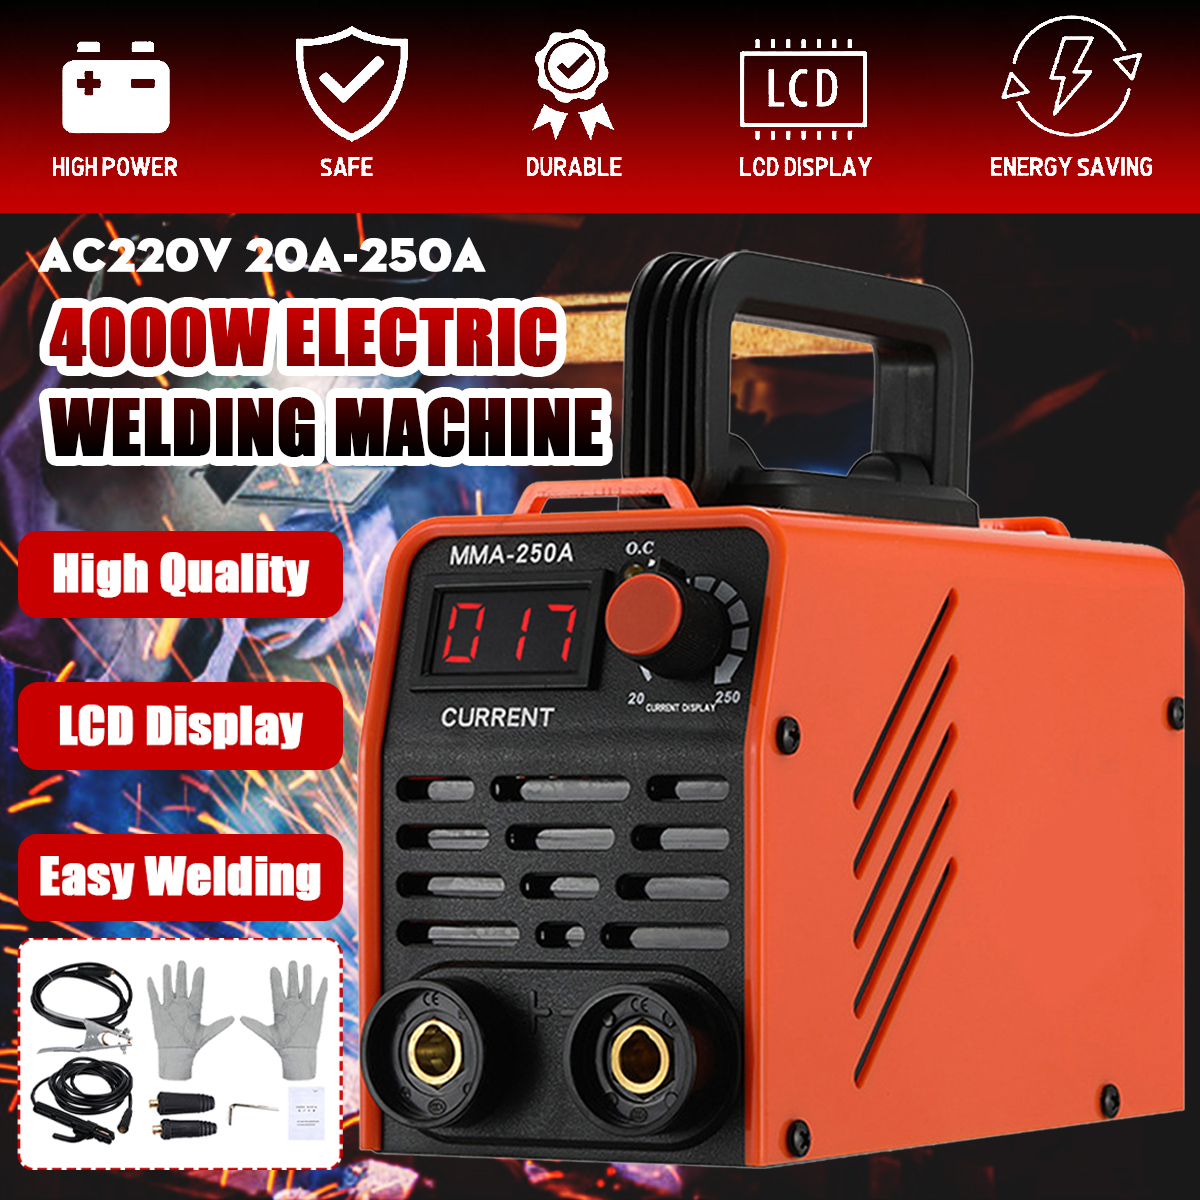 MMA-250-4000W-Electric-Welding-Machine-AC220V-ARC-Welder-Inverter-for-Home-Beginner-Iron-Stainless-S-1870557-1